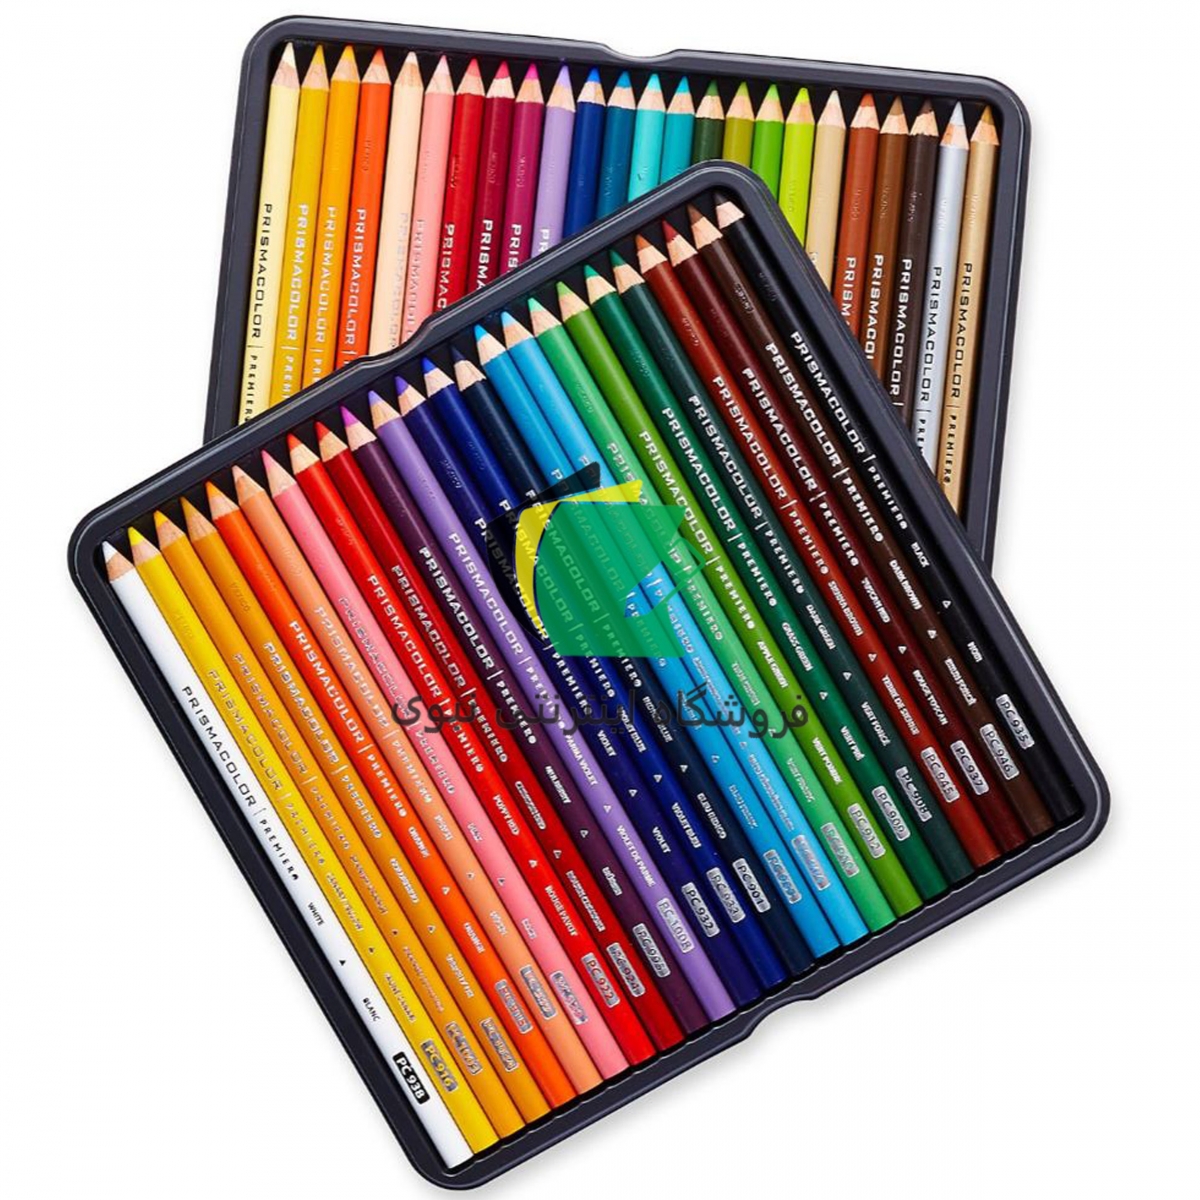 مداد رنگی 48 رنگ پریسماکالر مدل premier کد 3452